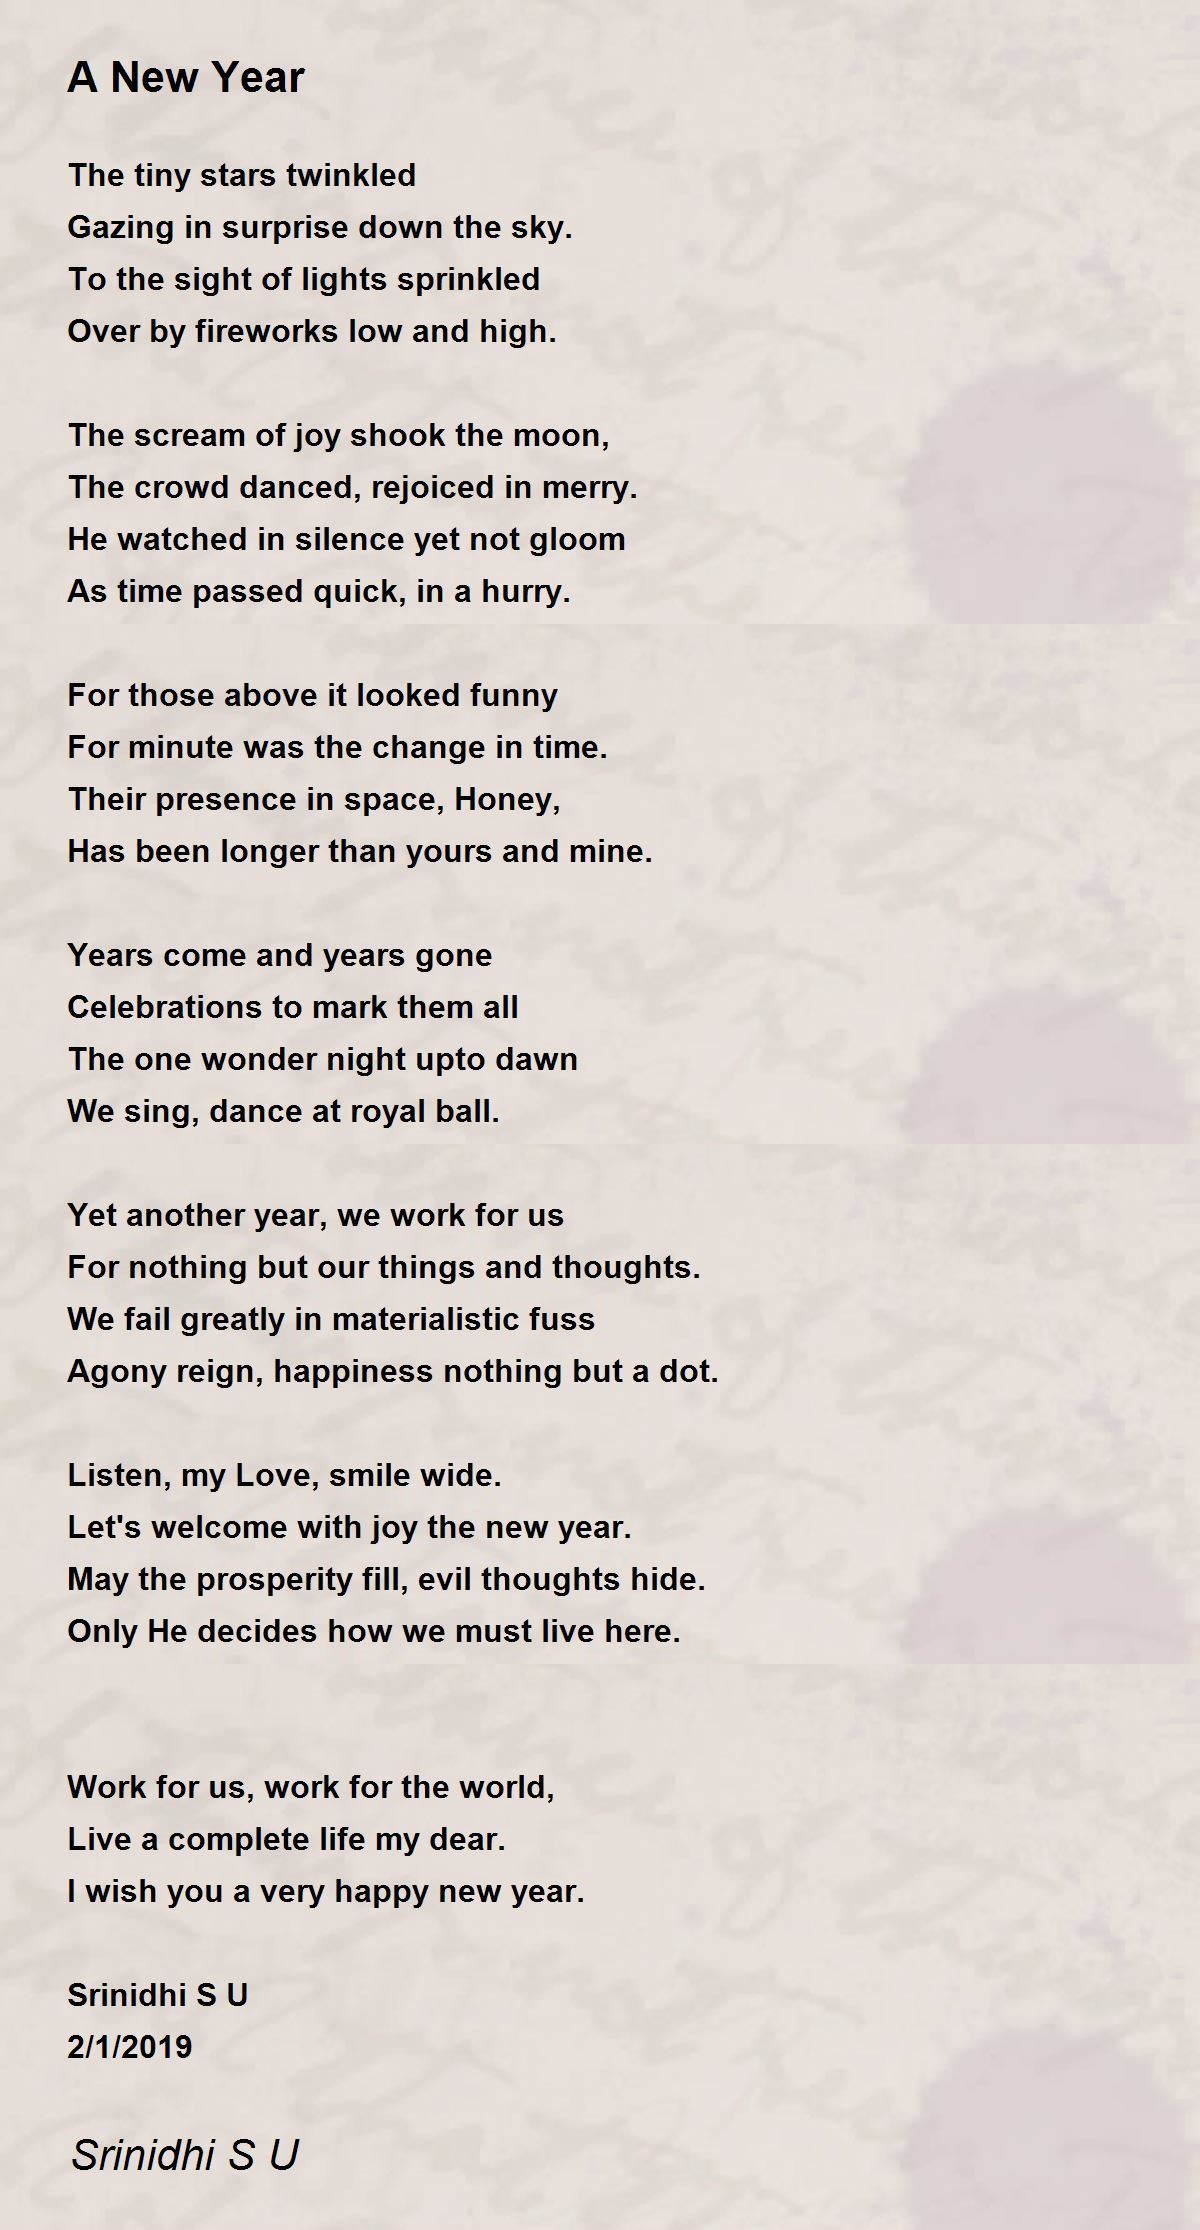 A New Year - A New Year Poem by Srinidhi S U